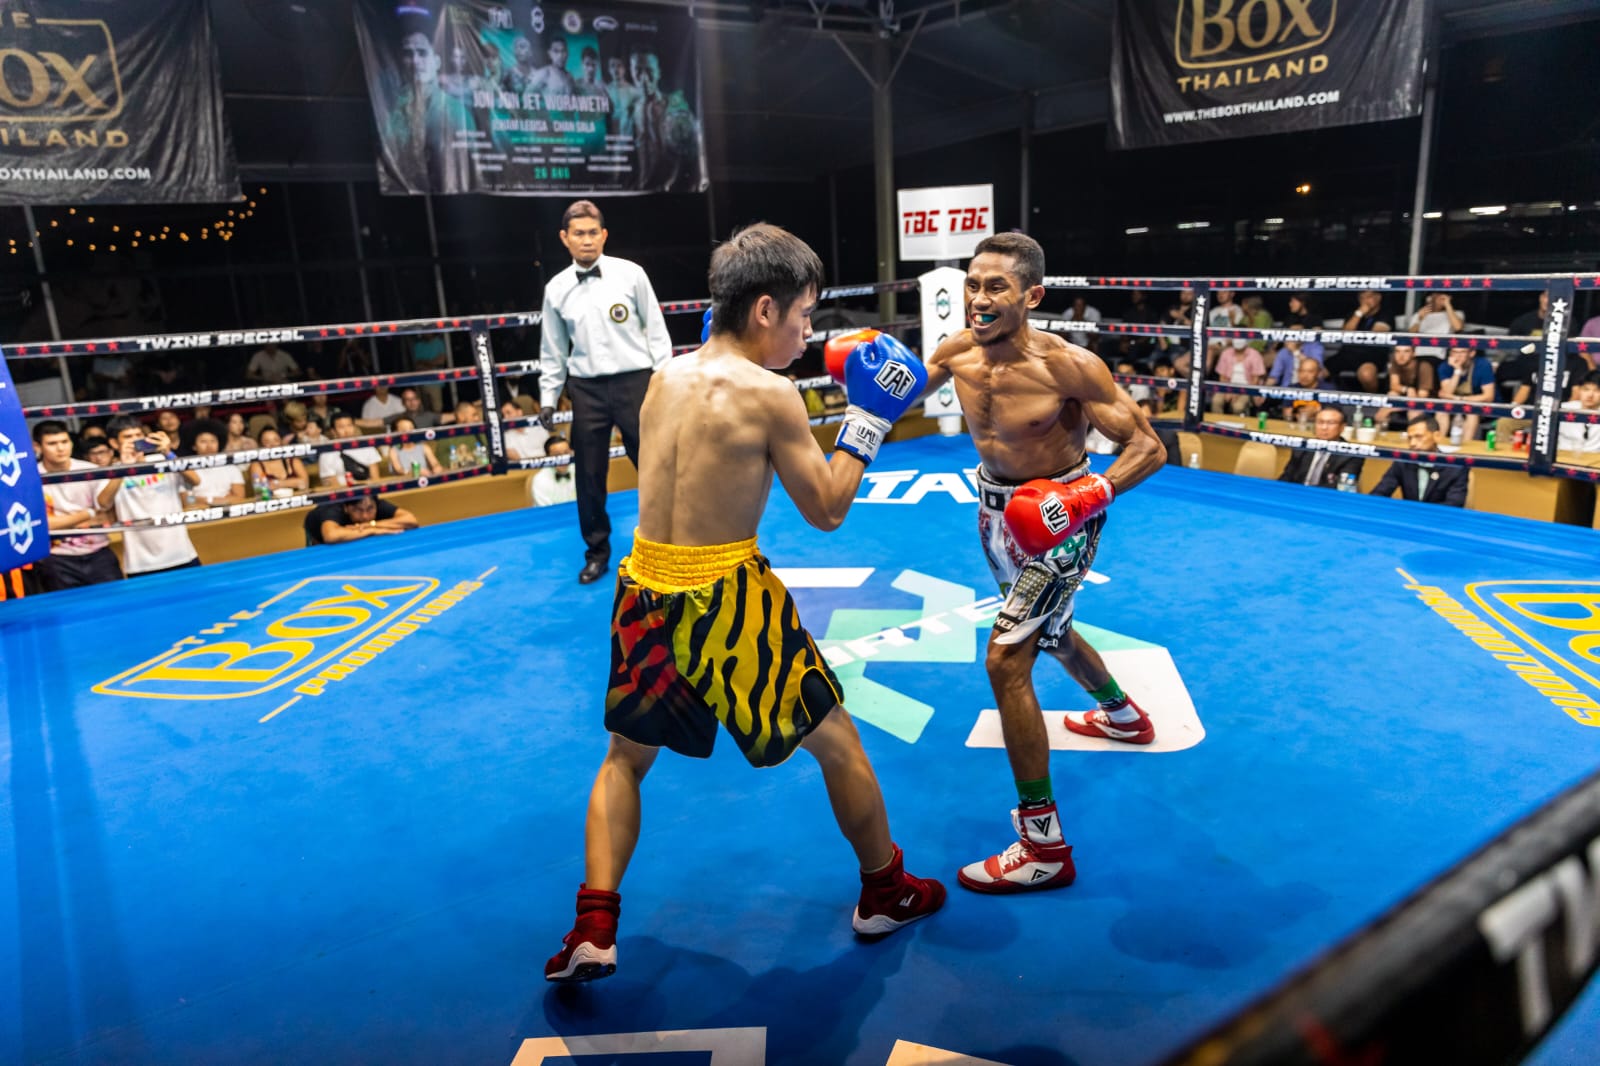 Lewat kombinasi pukulan beruntun, Jon Jon Jet menghentikan perlawanan Woraweth Nawateniwong di ronde ketujuh dan mempertahankan gelar juara kelas bantam super WBC Asian Boxing Council Continental dalam pertarungan di Bangkok, Sabtu (26/8). Foto/dok xbc